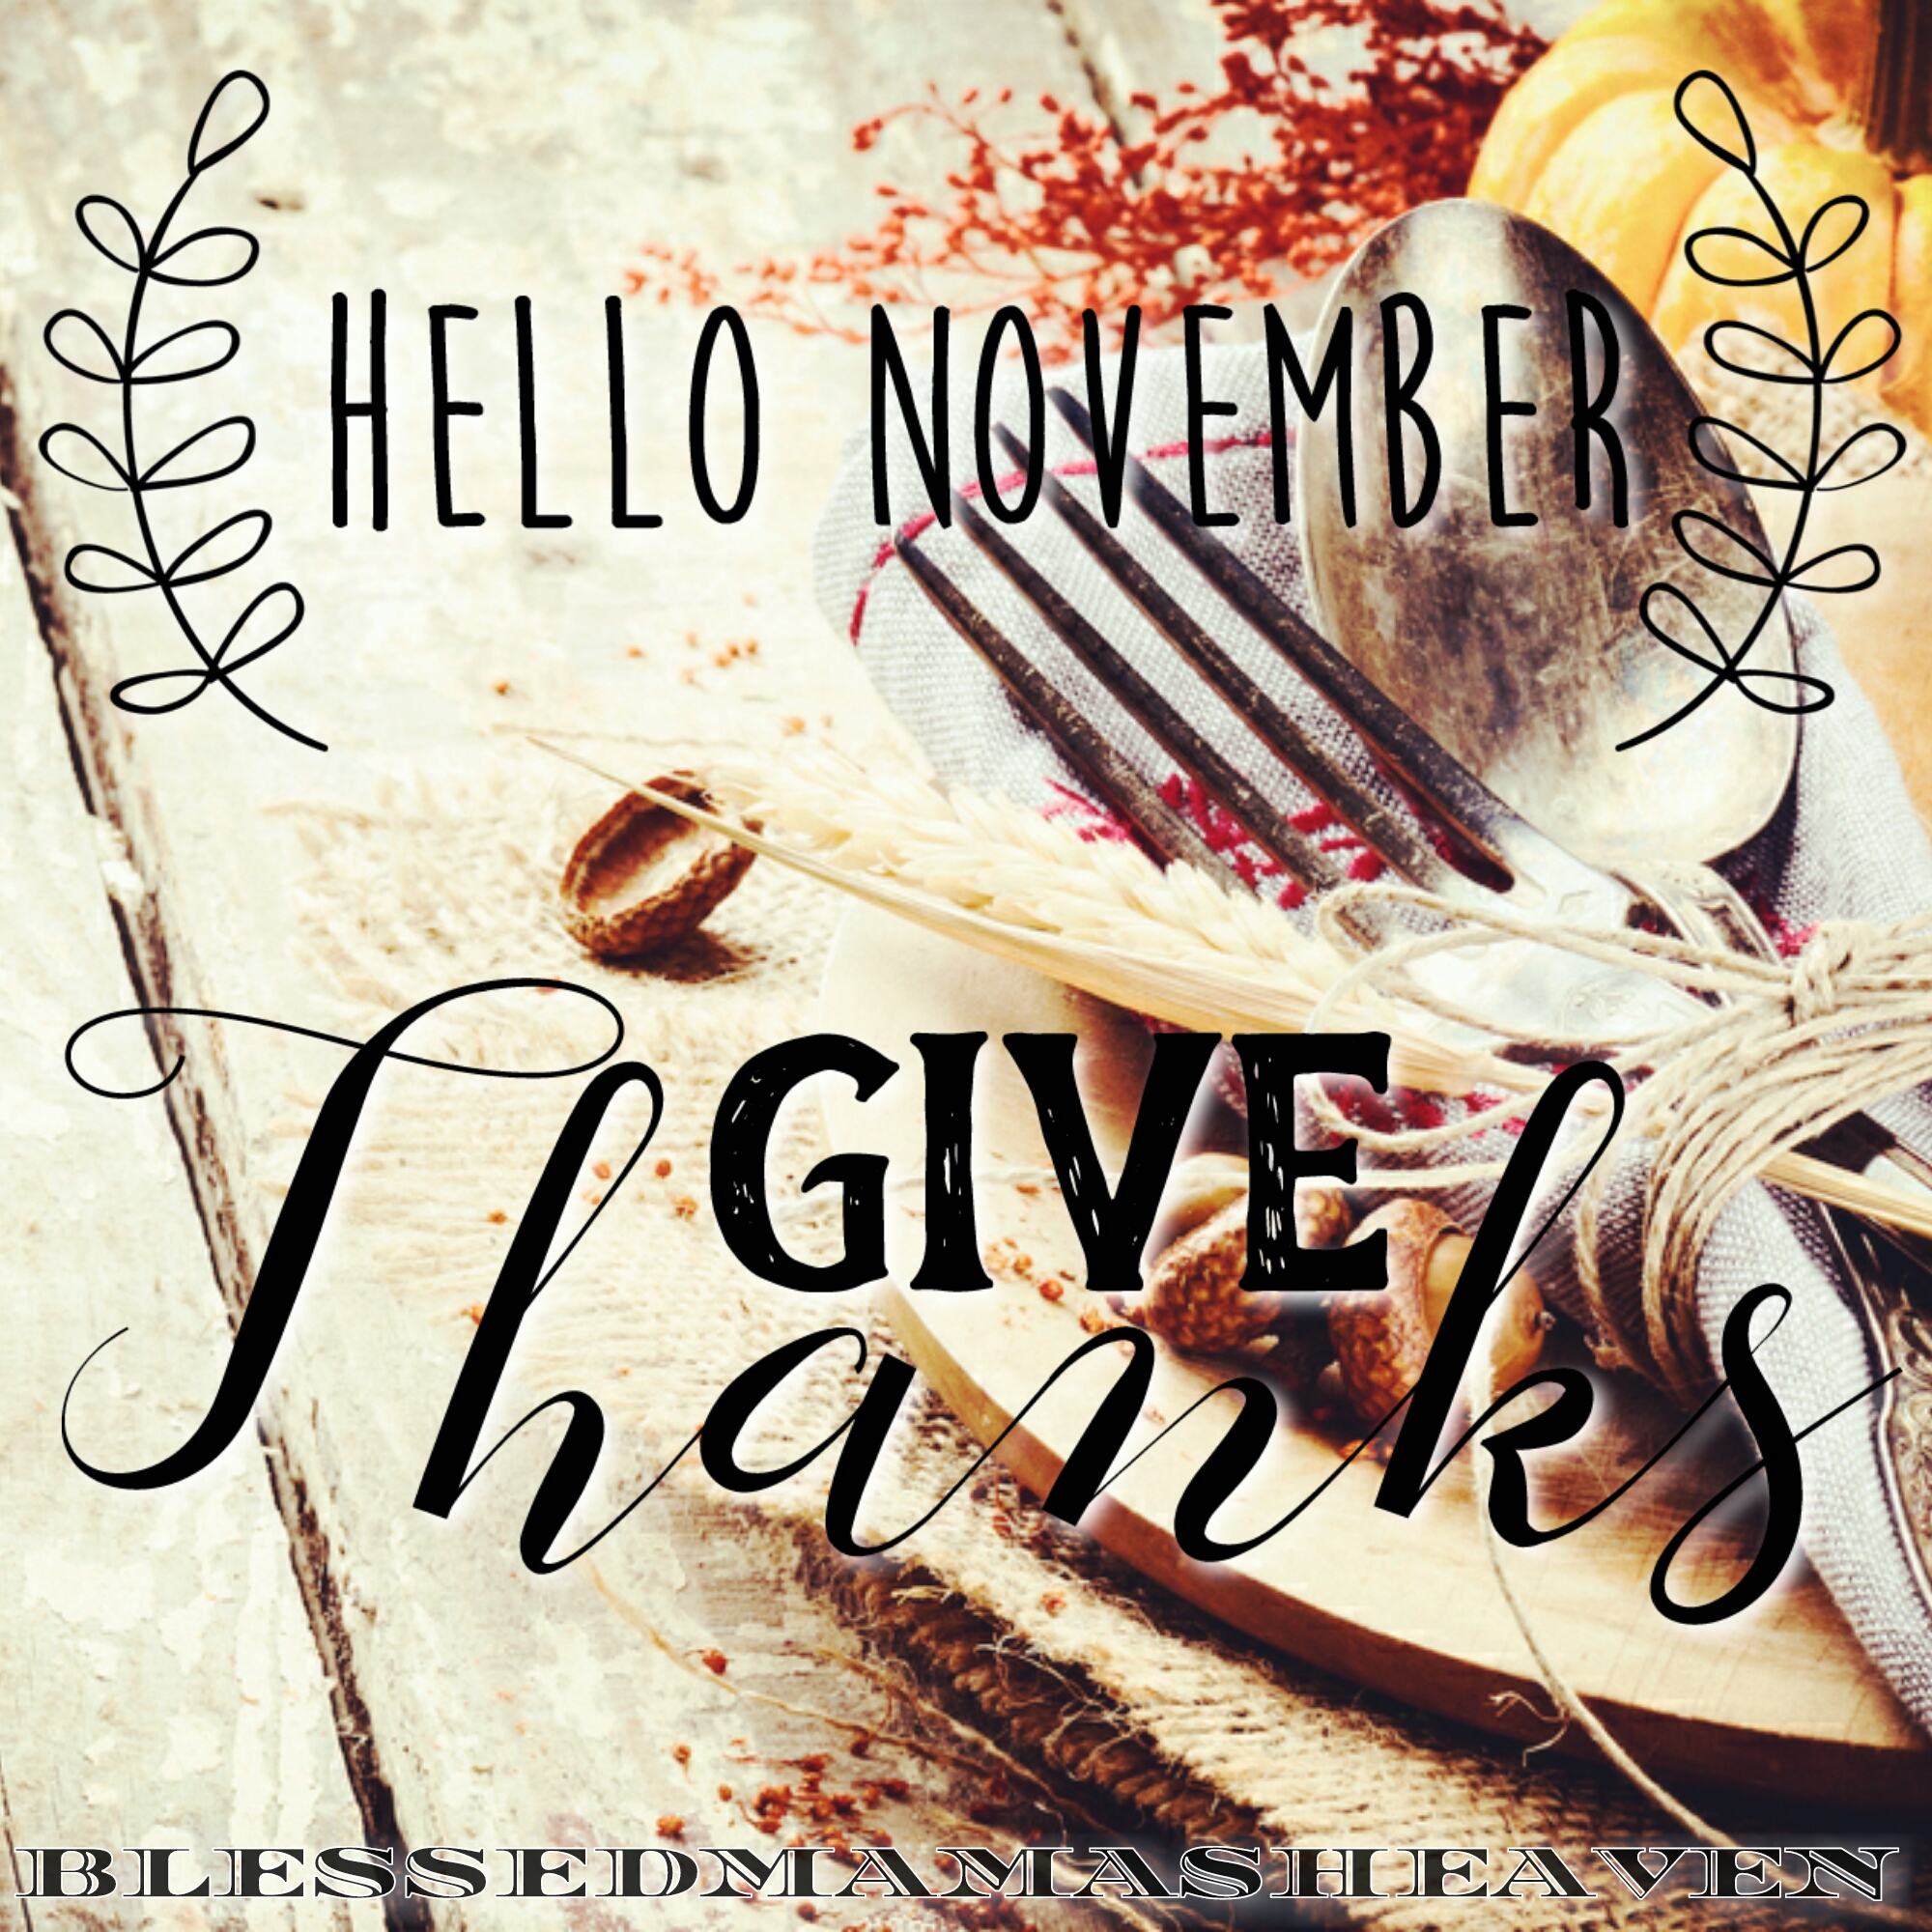 Hello November..Let's give thanks! 